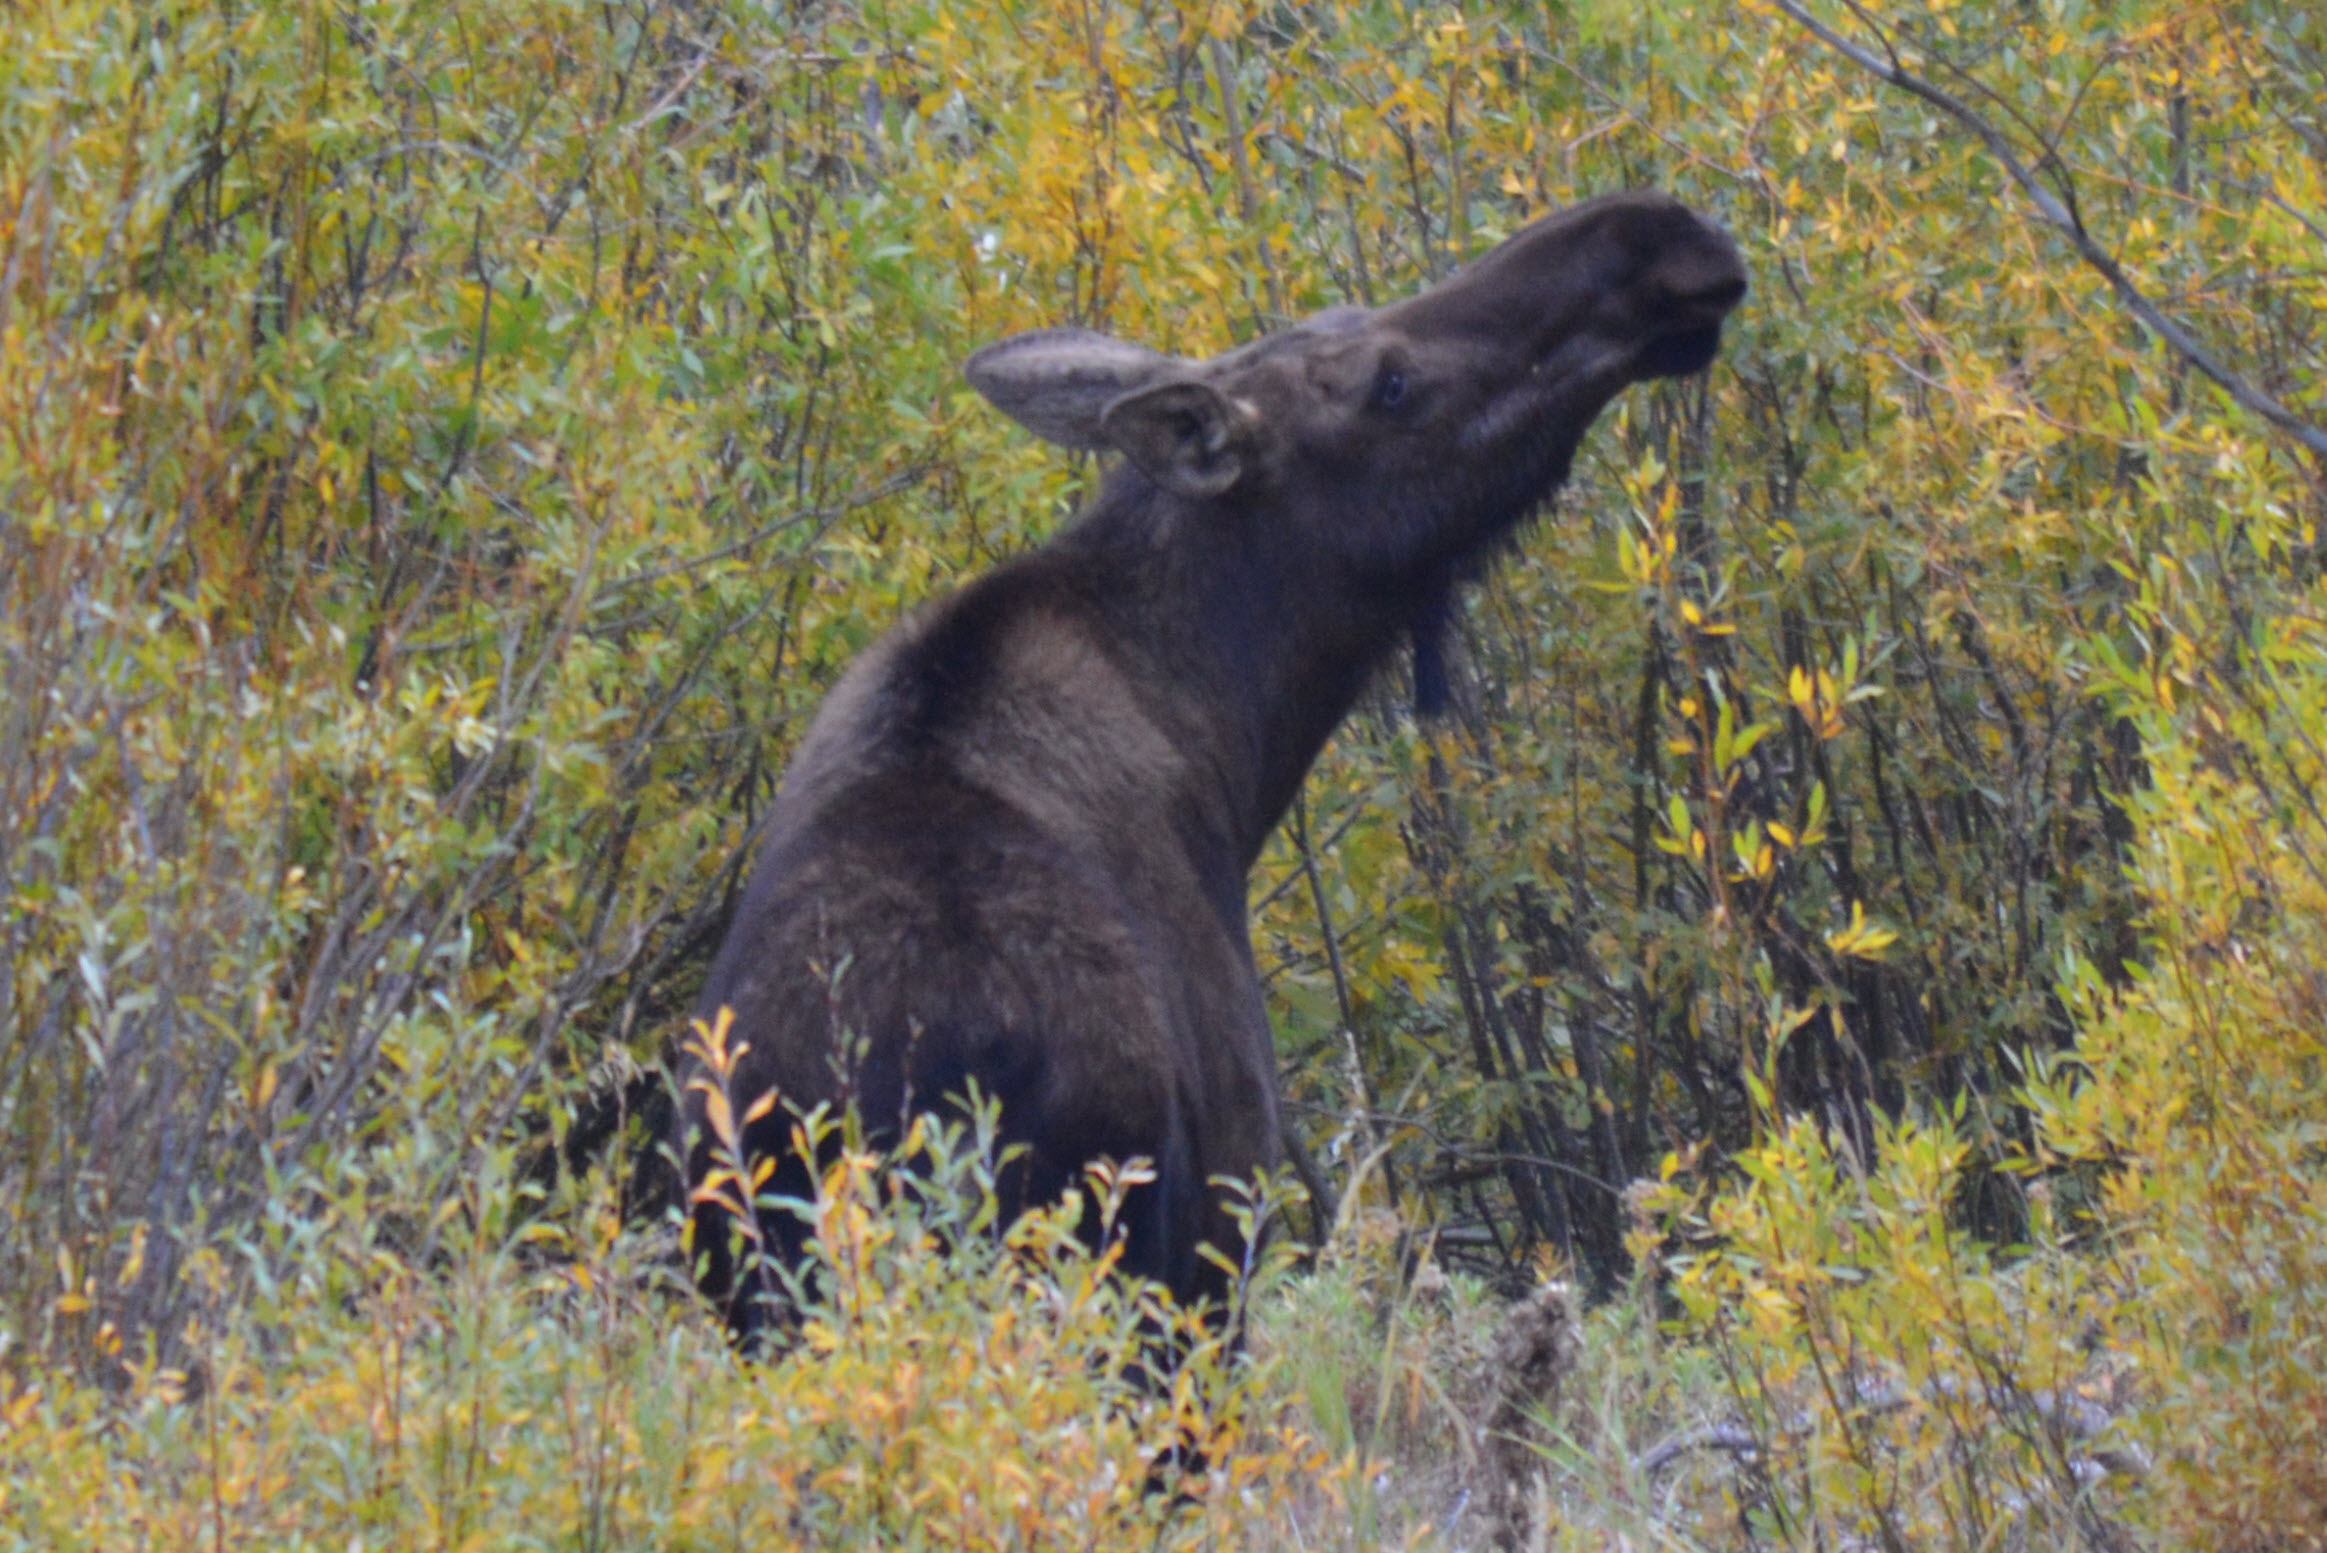 Moose cow outside Yellowstone near Waipiti, Wyoming, Sept 2012